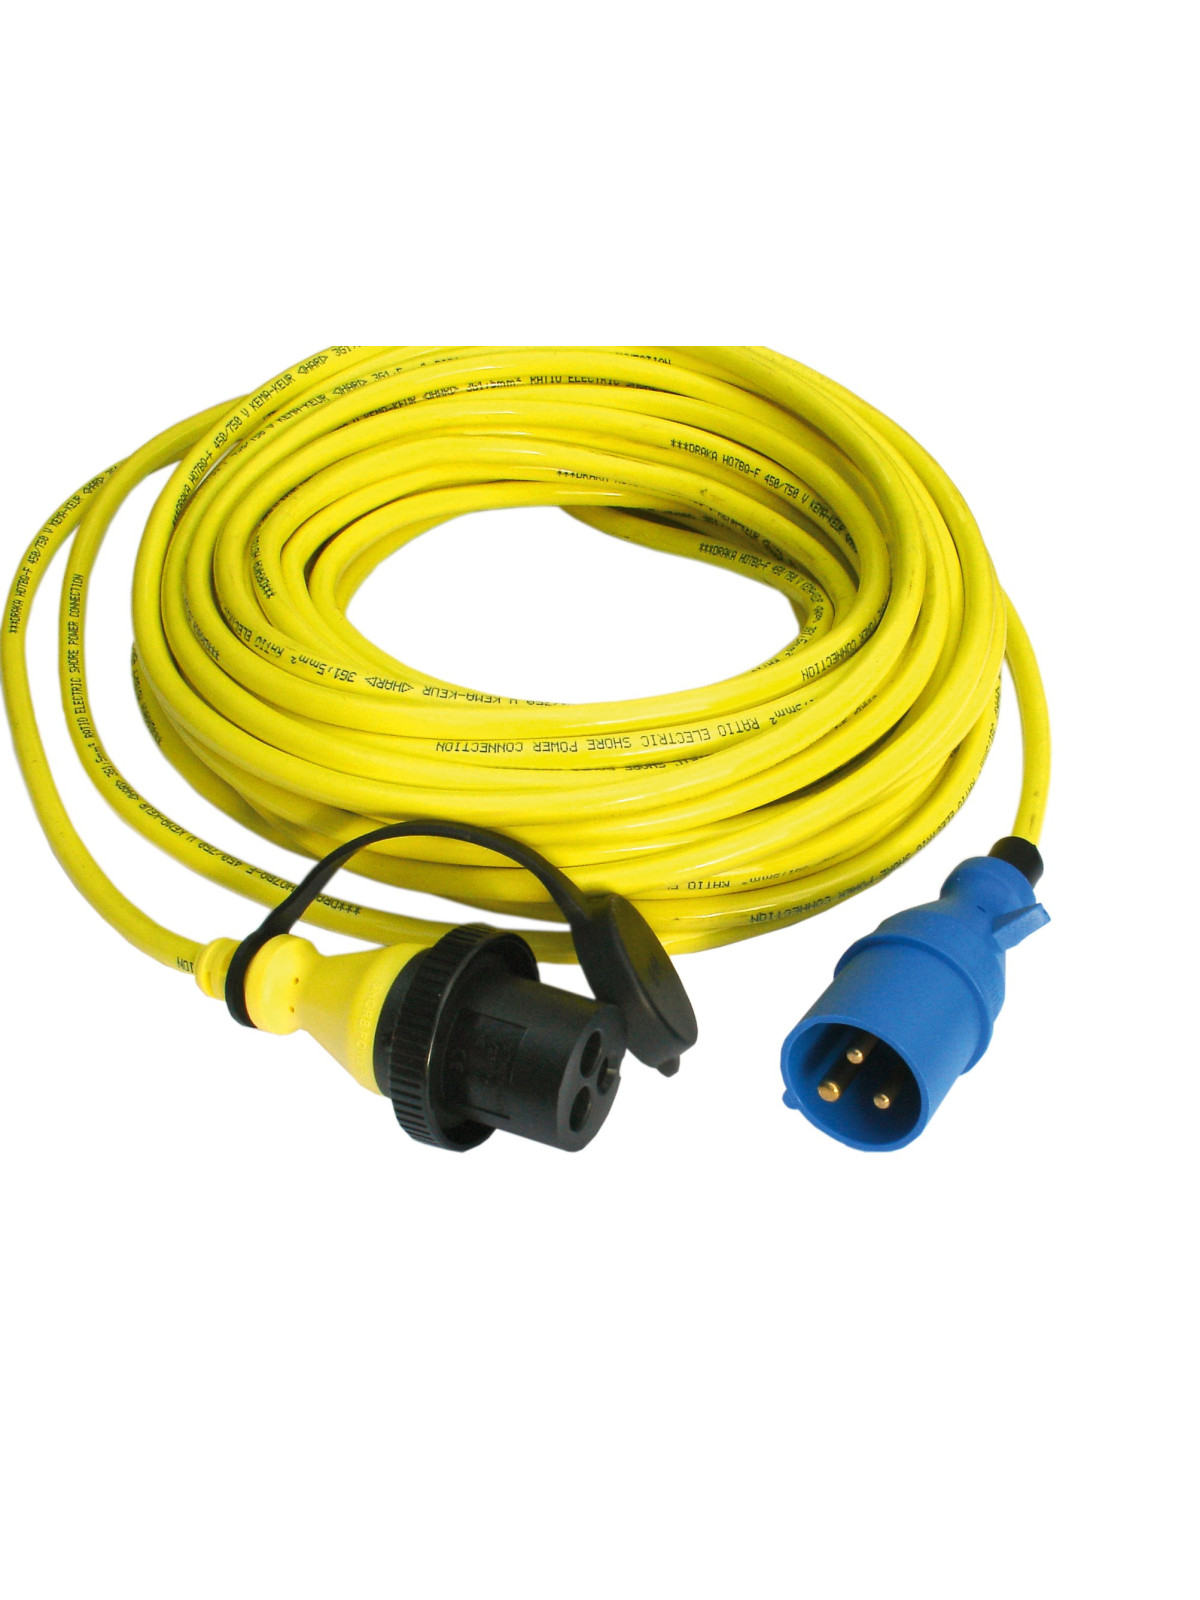 RoadEu - Cable alargador de alimentación 16A - Cable alargador CEE de 25  Metros con Soporte de Cable - Cable de alimentación 16A 380V - Cable 5x2  5mm2 - Enchufe CEE 16A 